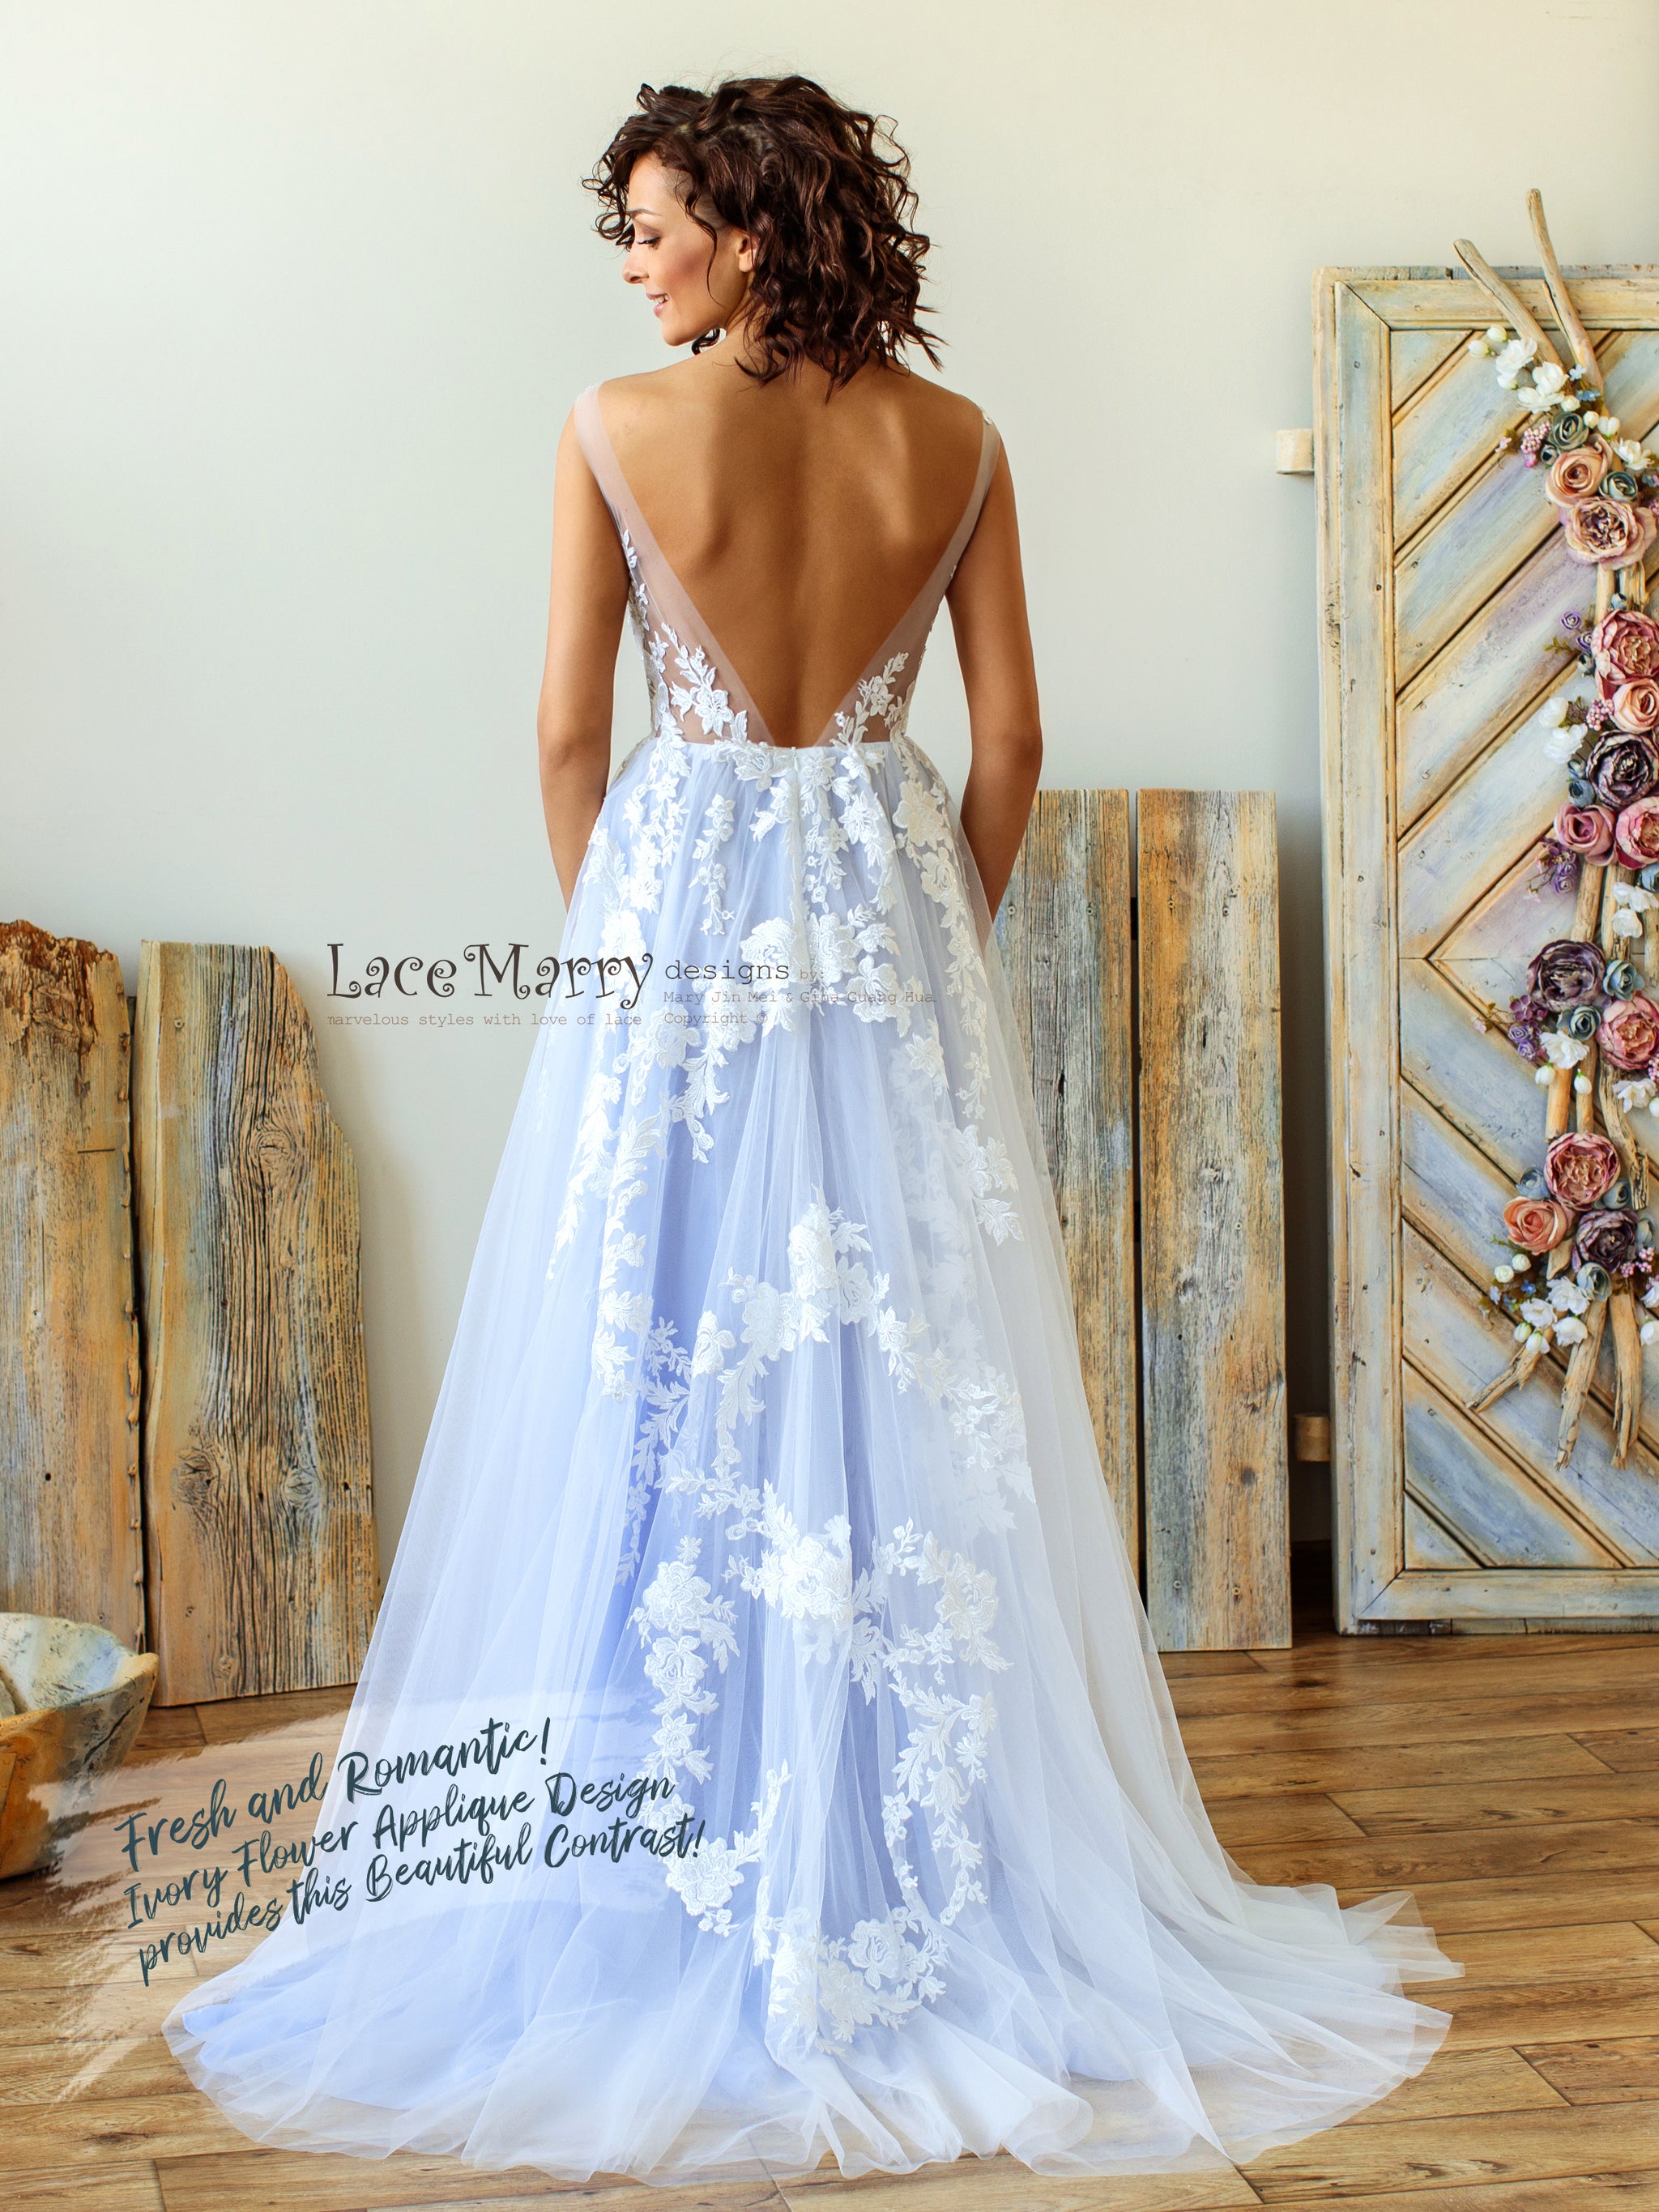 Aggregate 175+ wedding gown flower design latest